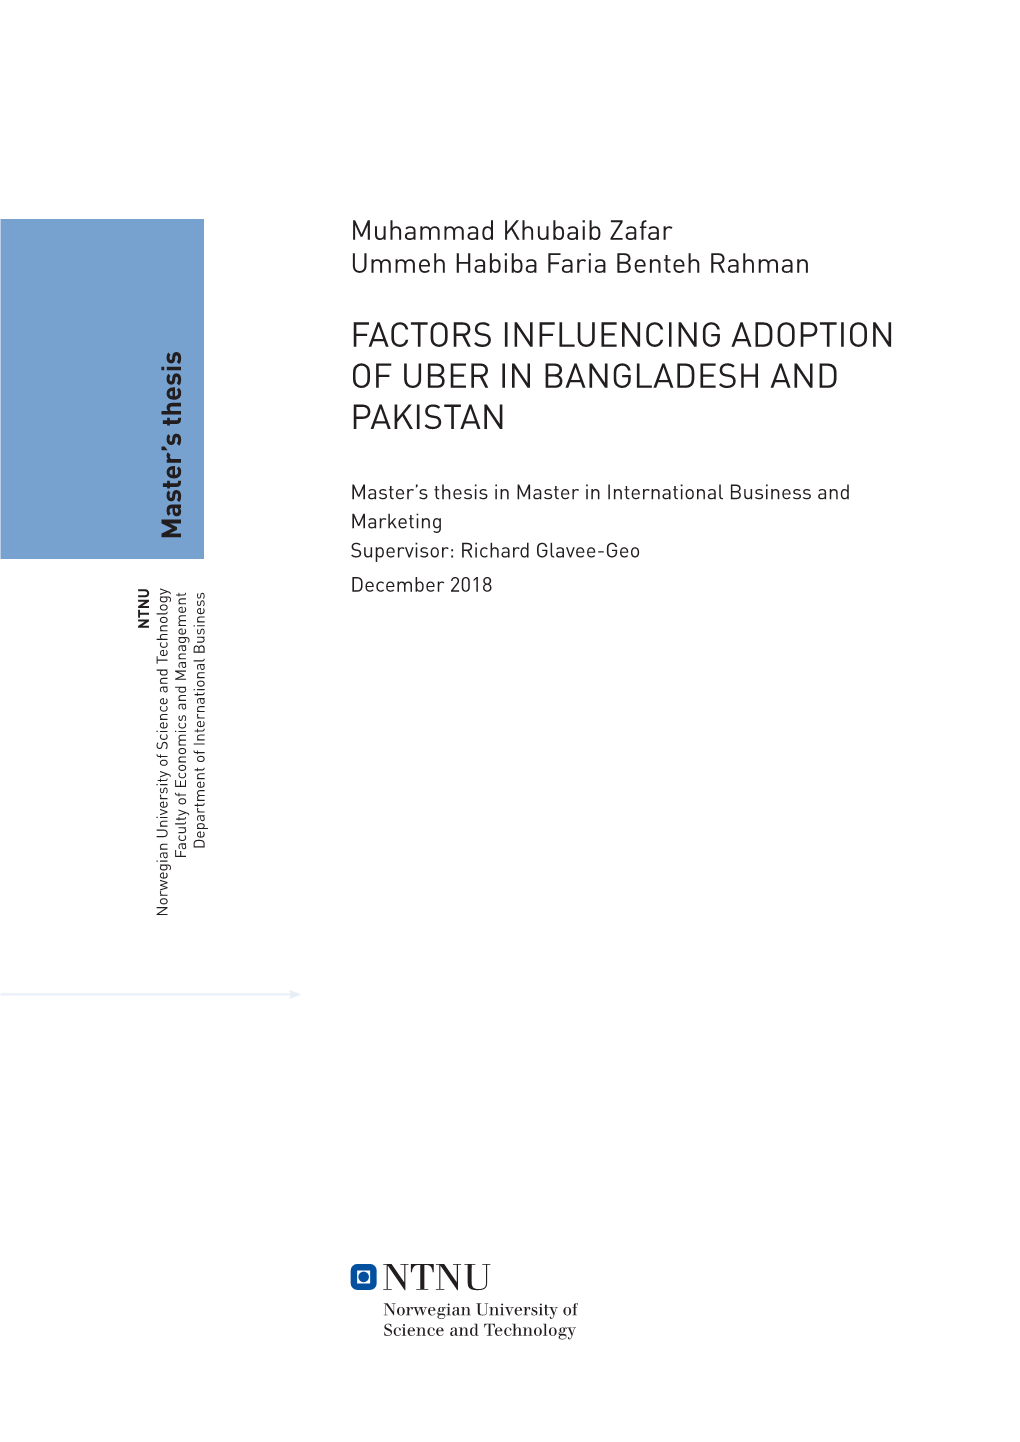 Factors Influencing Adoption of Uber in Bangladesh and Pakistan